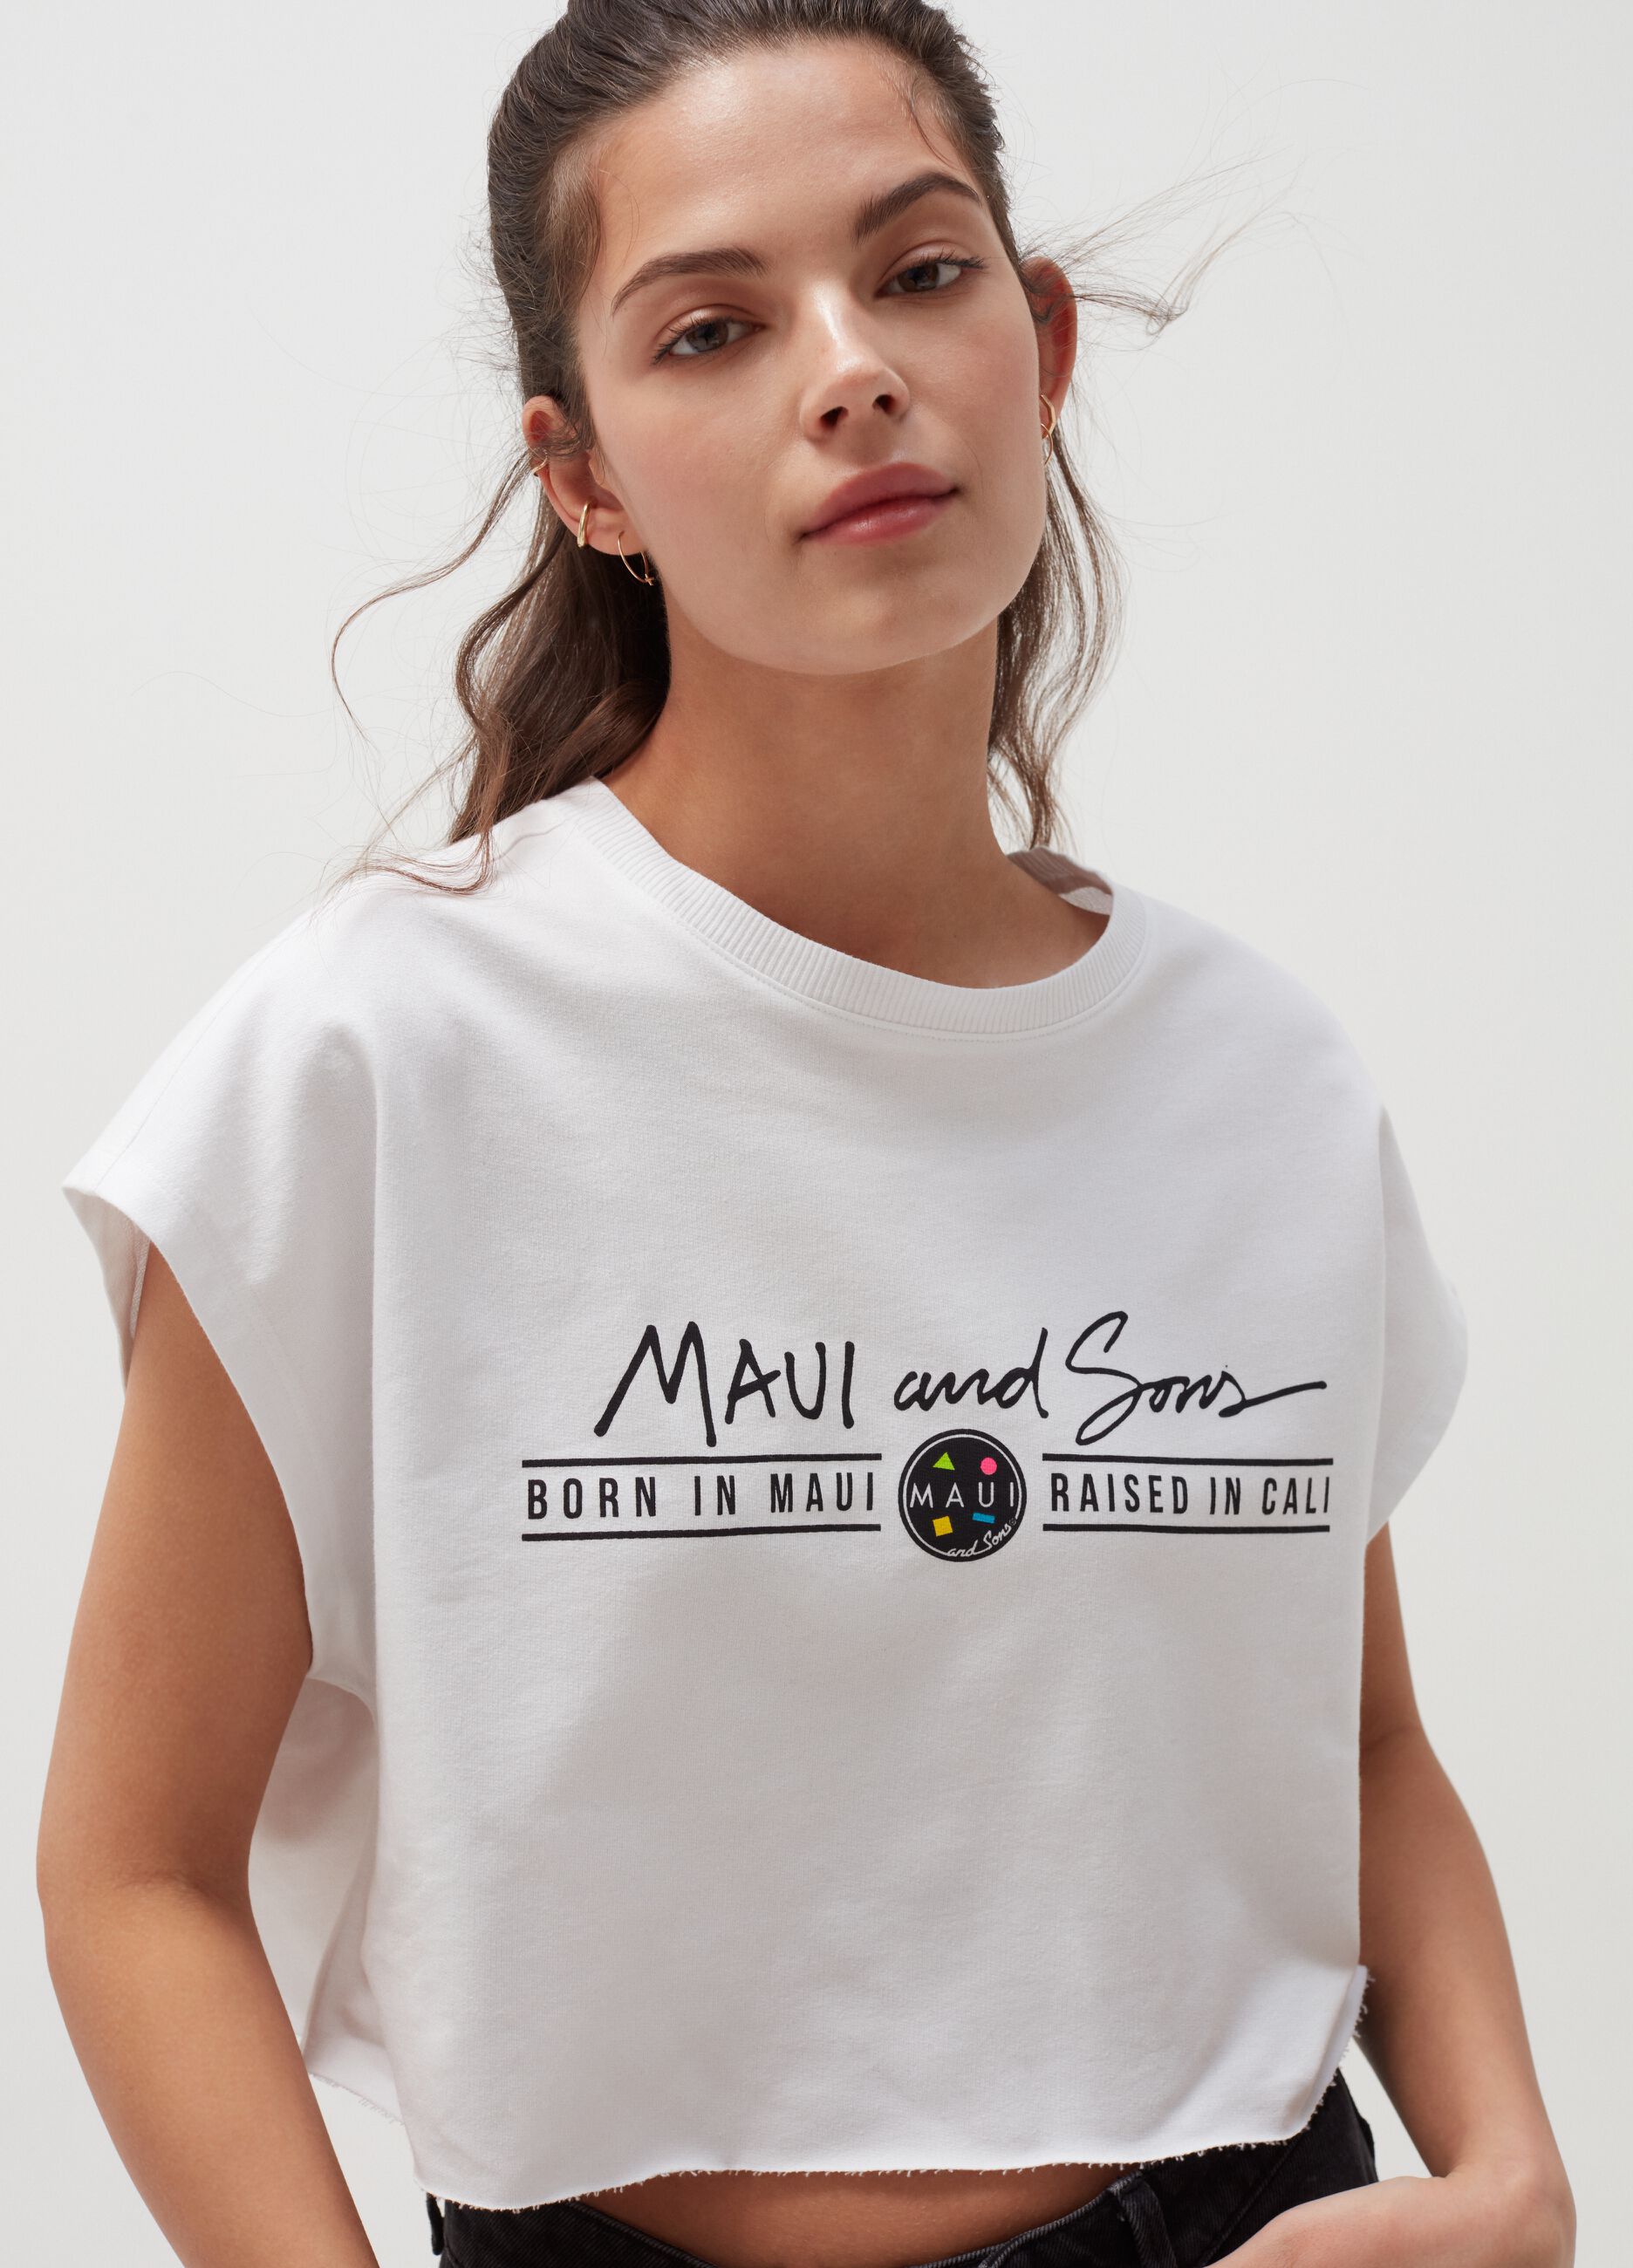 Maui and Sons sleeveless plush T-shirt.